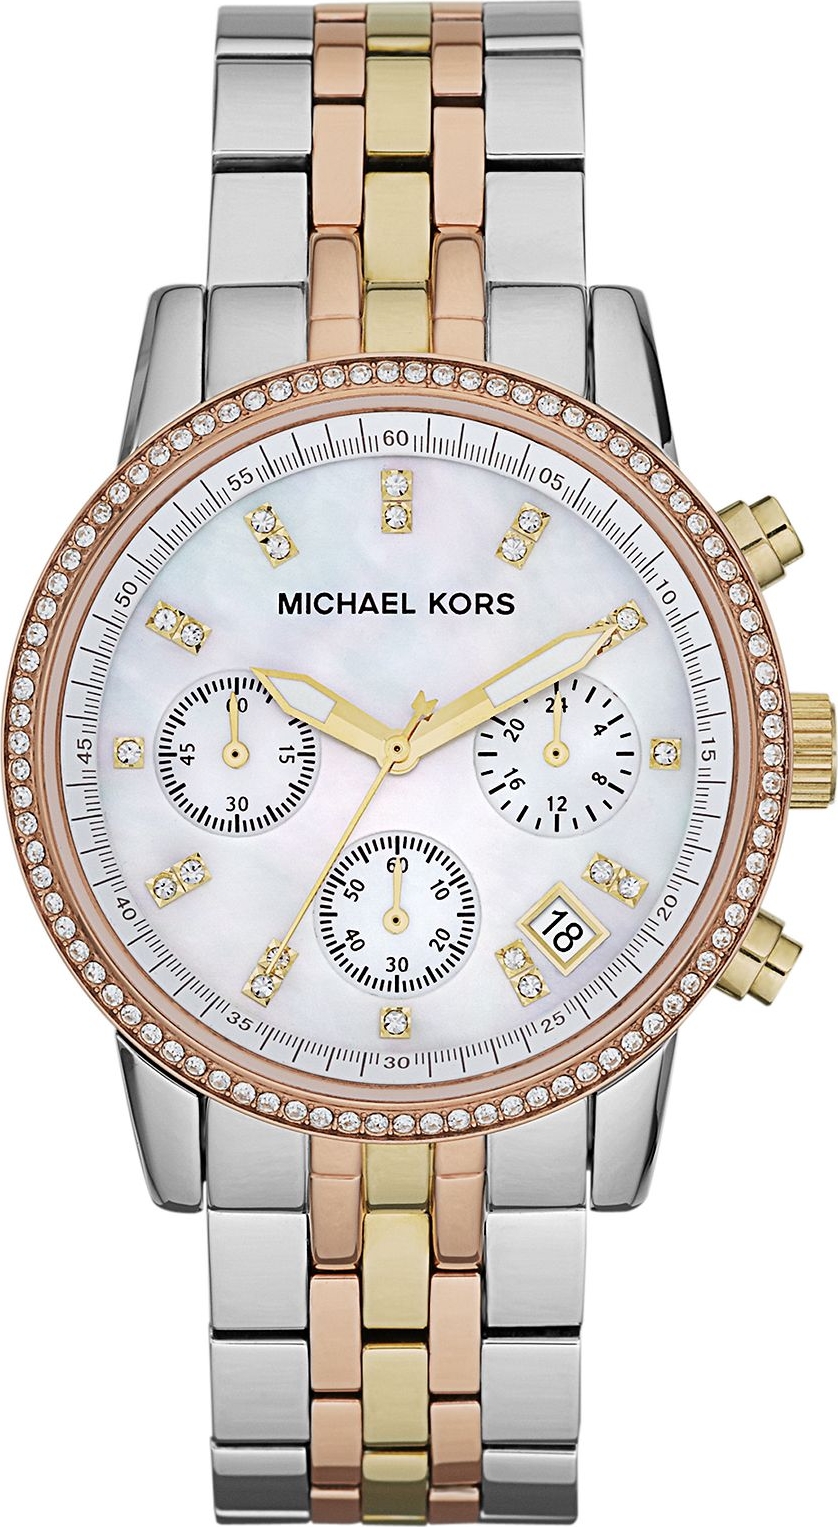 Amazoncom Michael Kors Womens Darci TriTone Watch MK3203  Michael Kors  Clothing Shoes  Jewelry